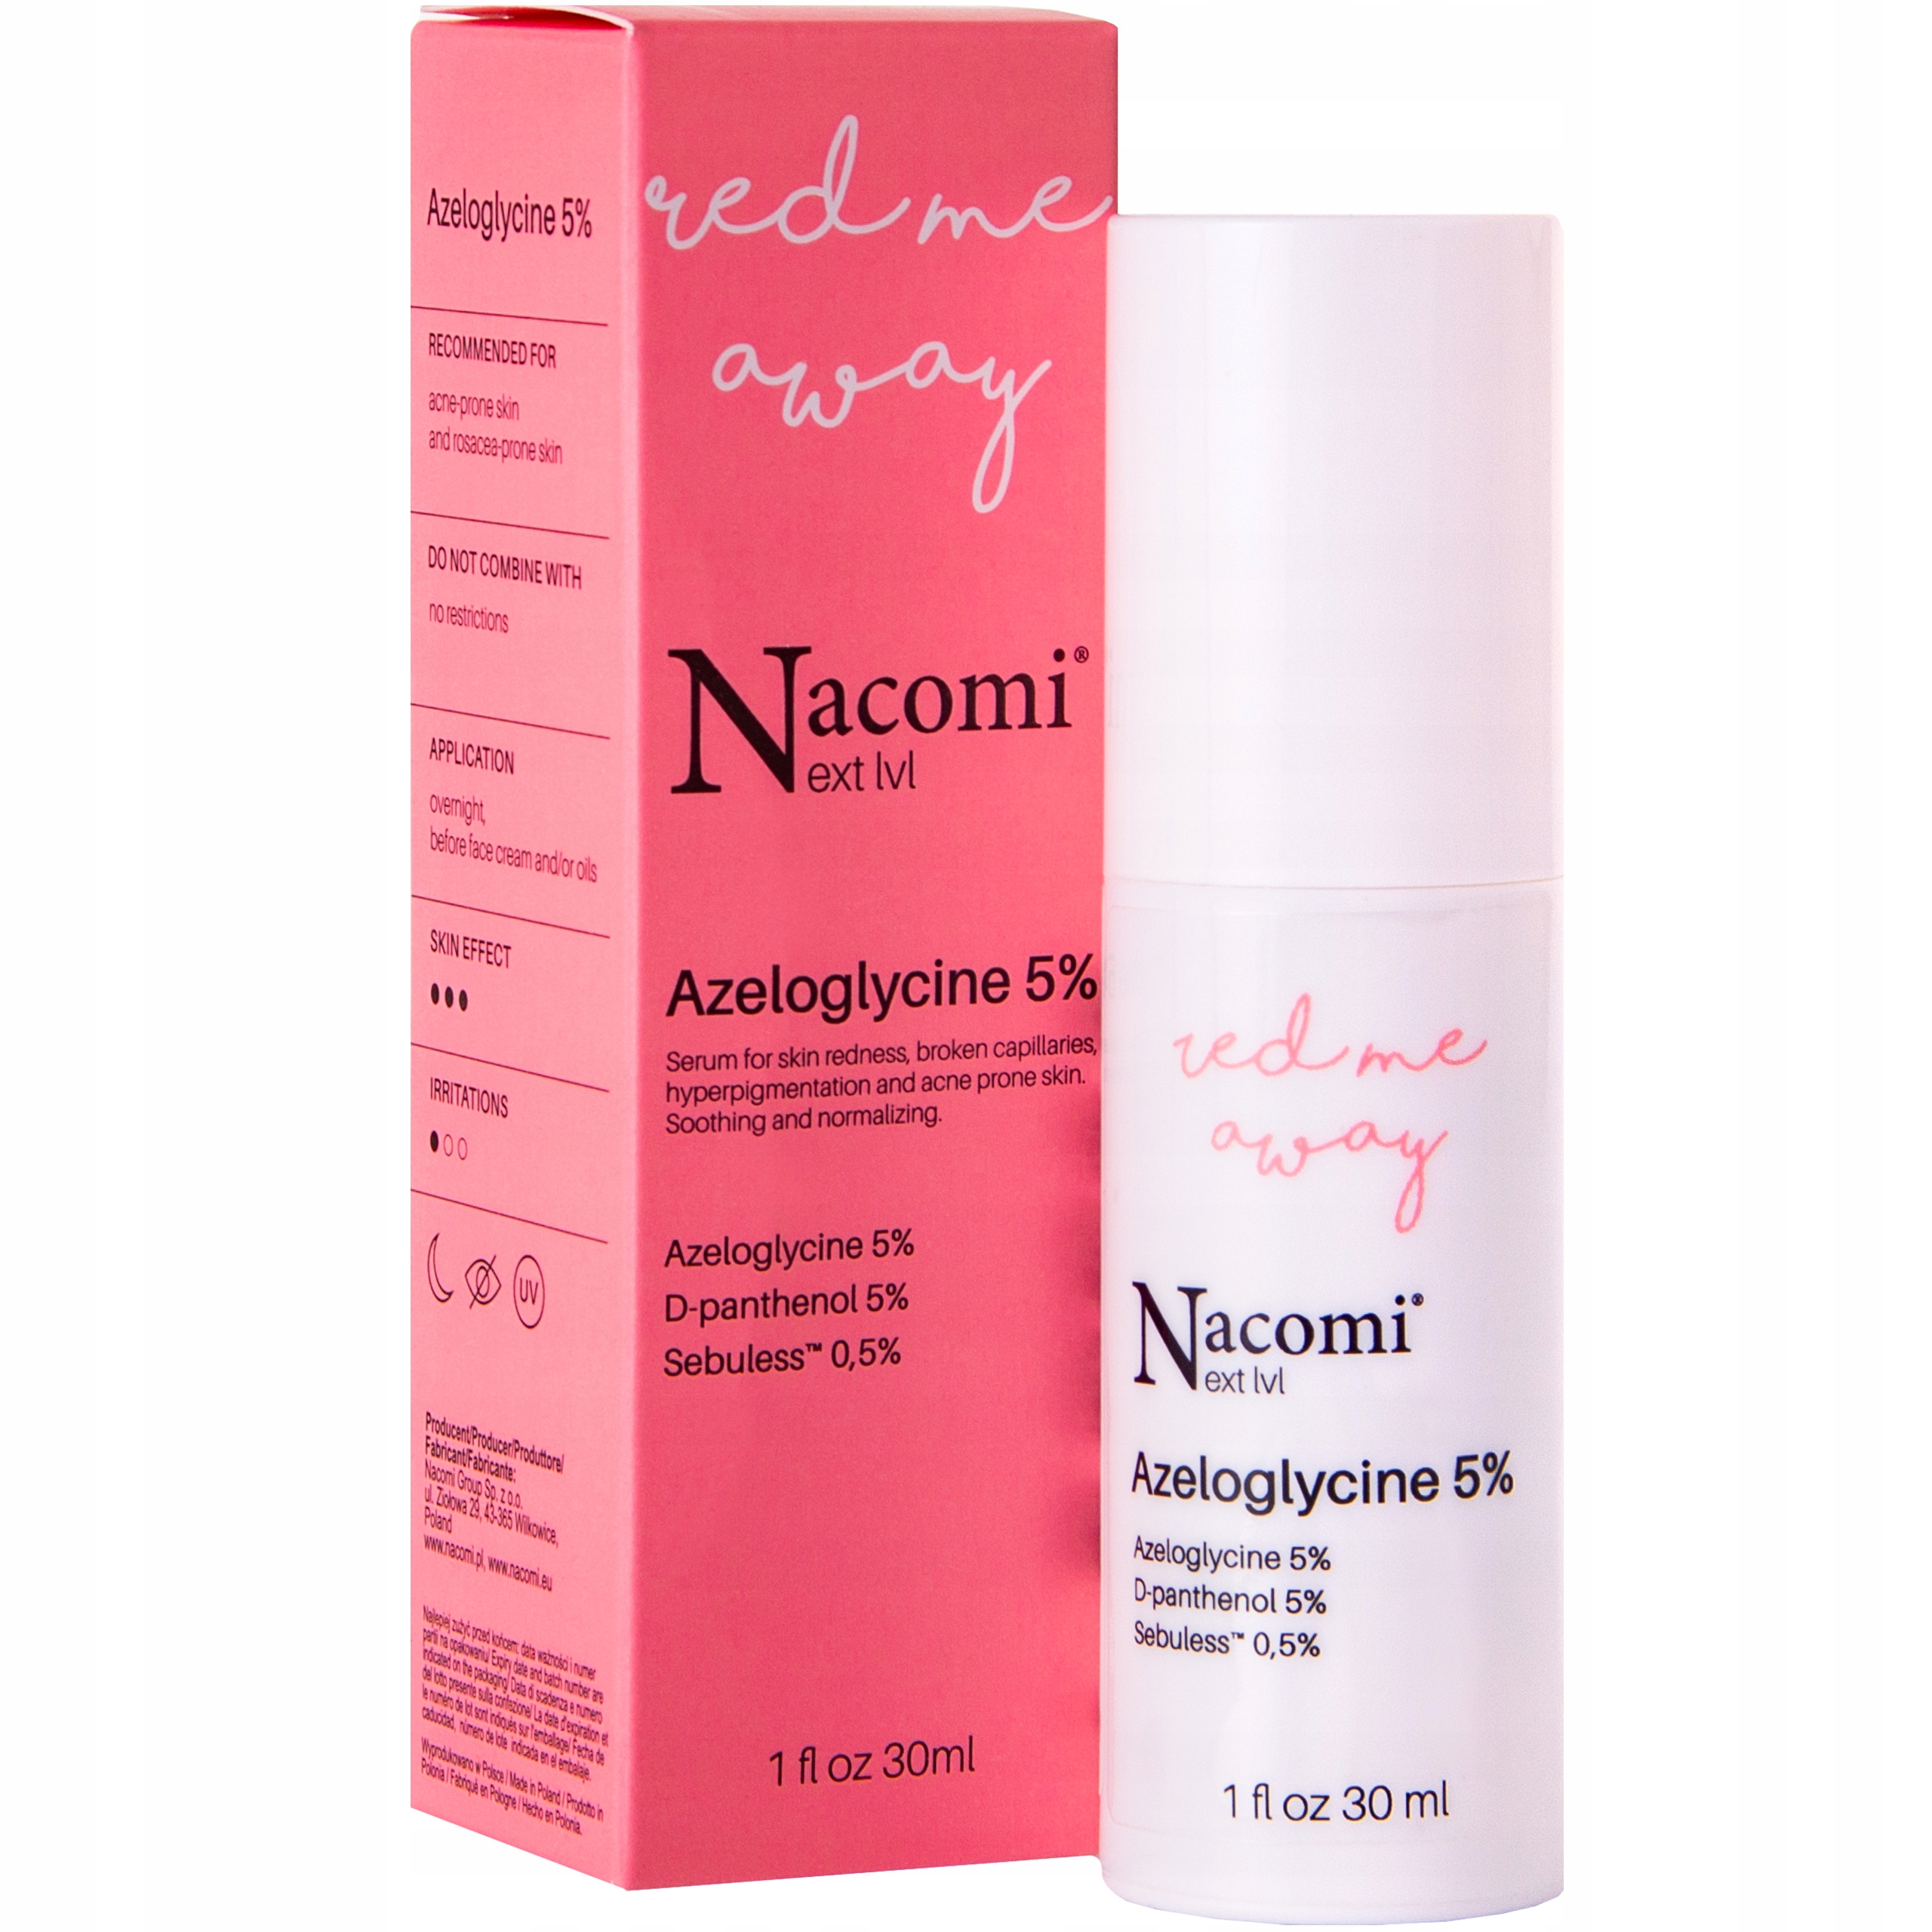 Nacomi Next Level Azeloglicyna 5% + B6 30ml 14135329860 - Allegro.pl